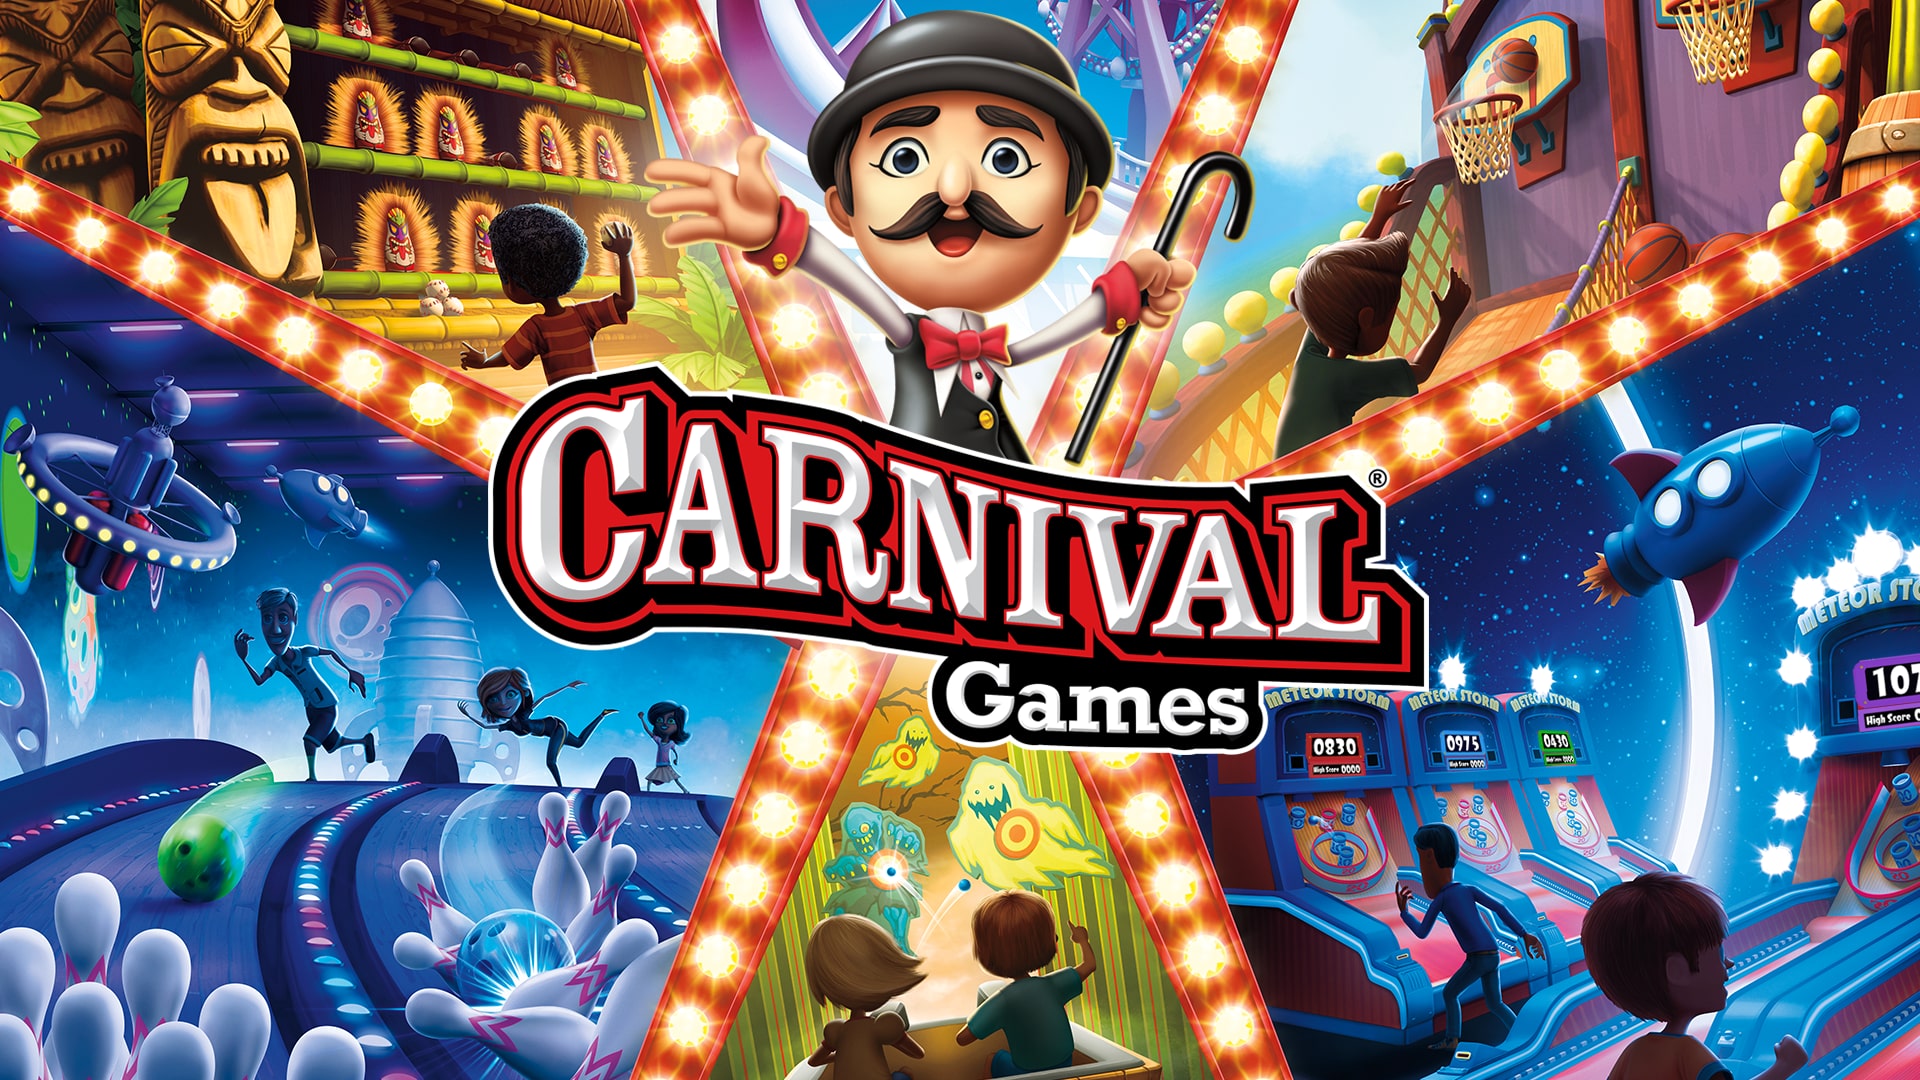 Carnival Games - PlayStation 4